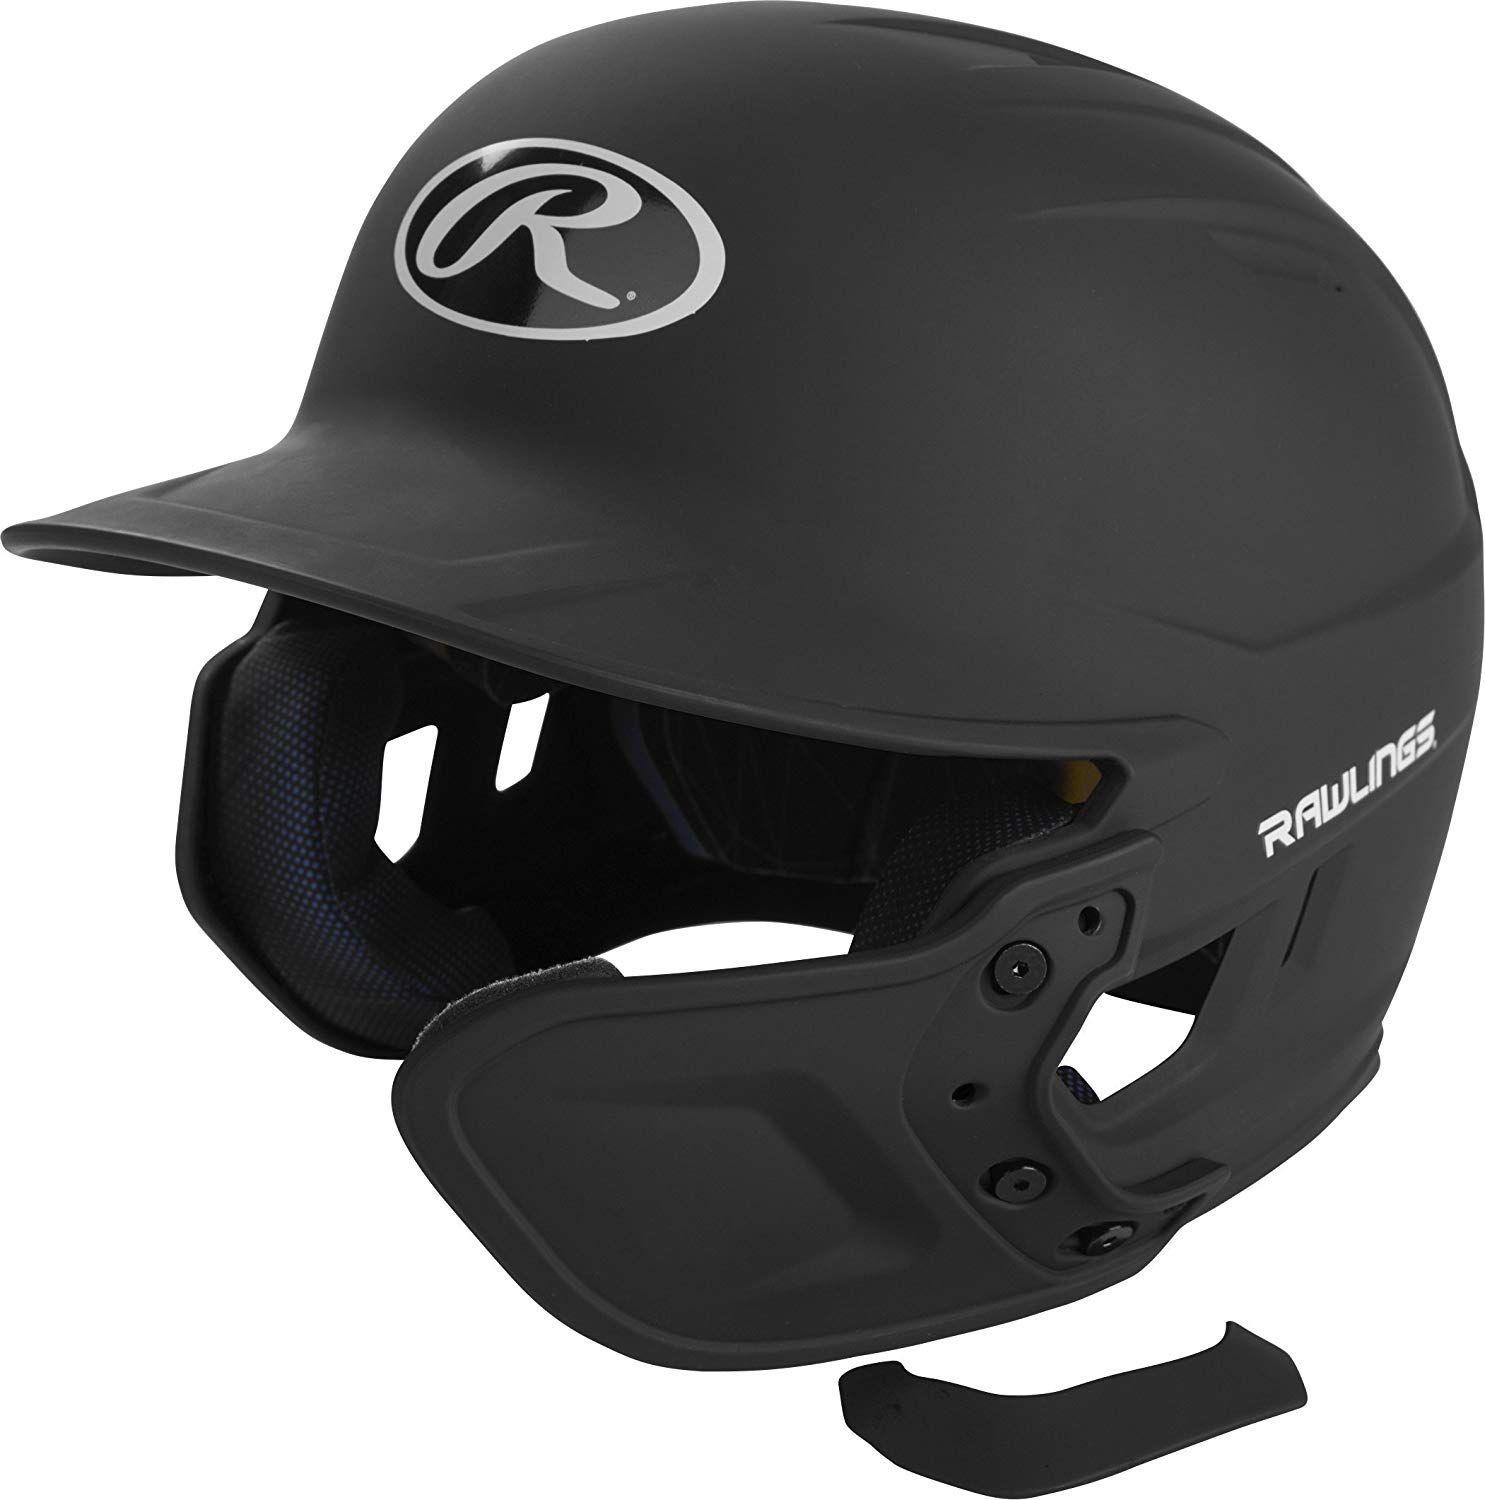 Rawlings R Logo - Amazon.com : Rawlings R Flap Batting Helmet Extension Faceguard